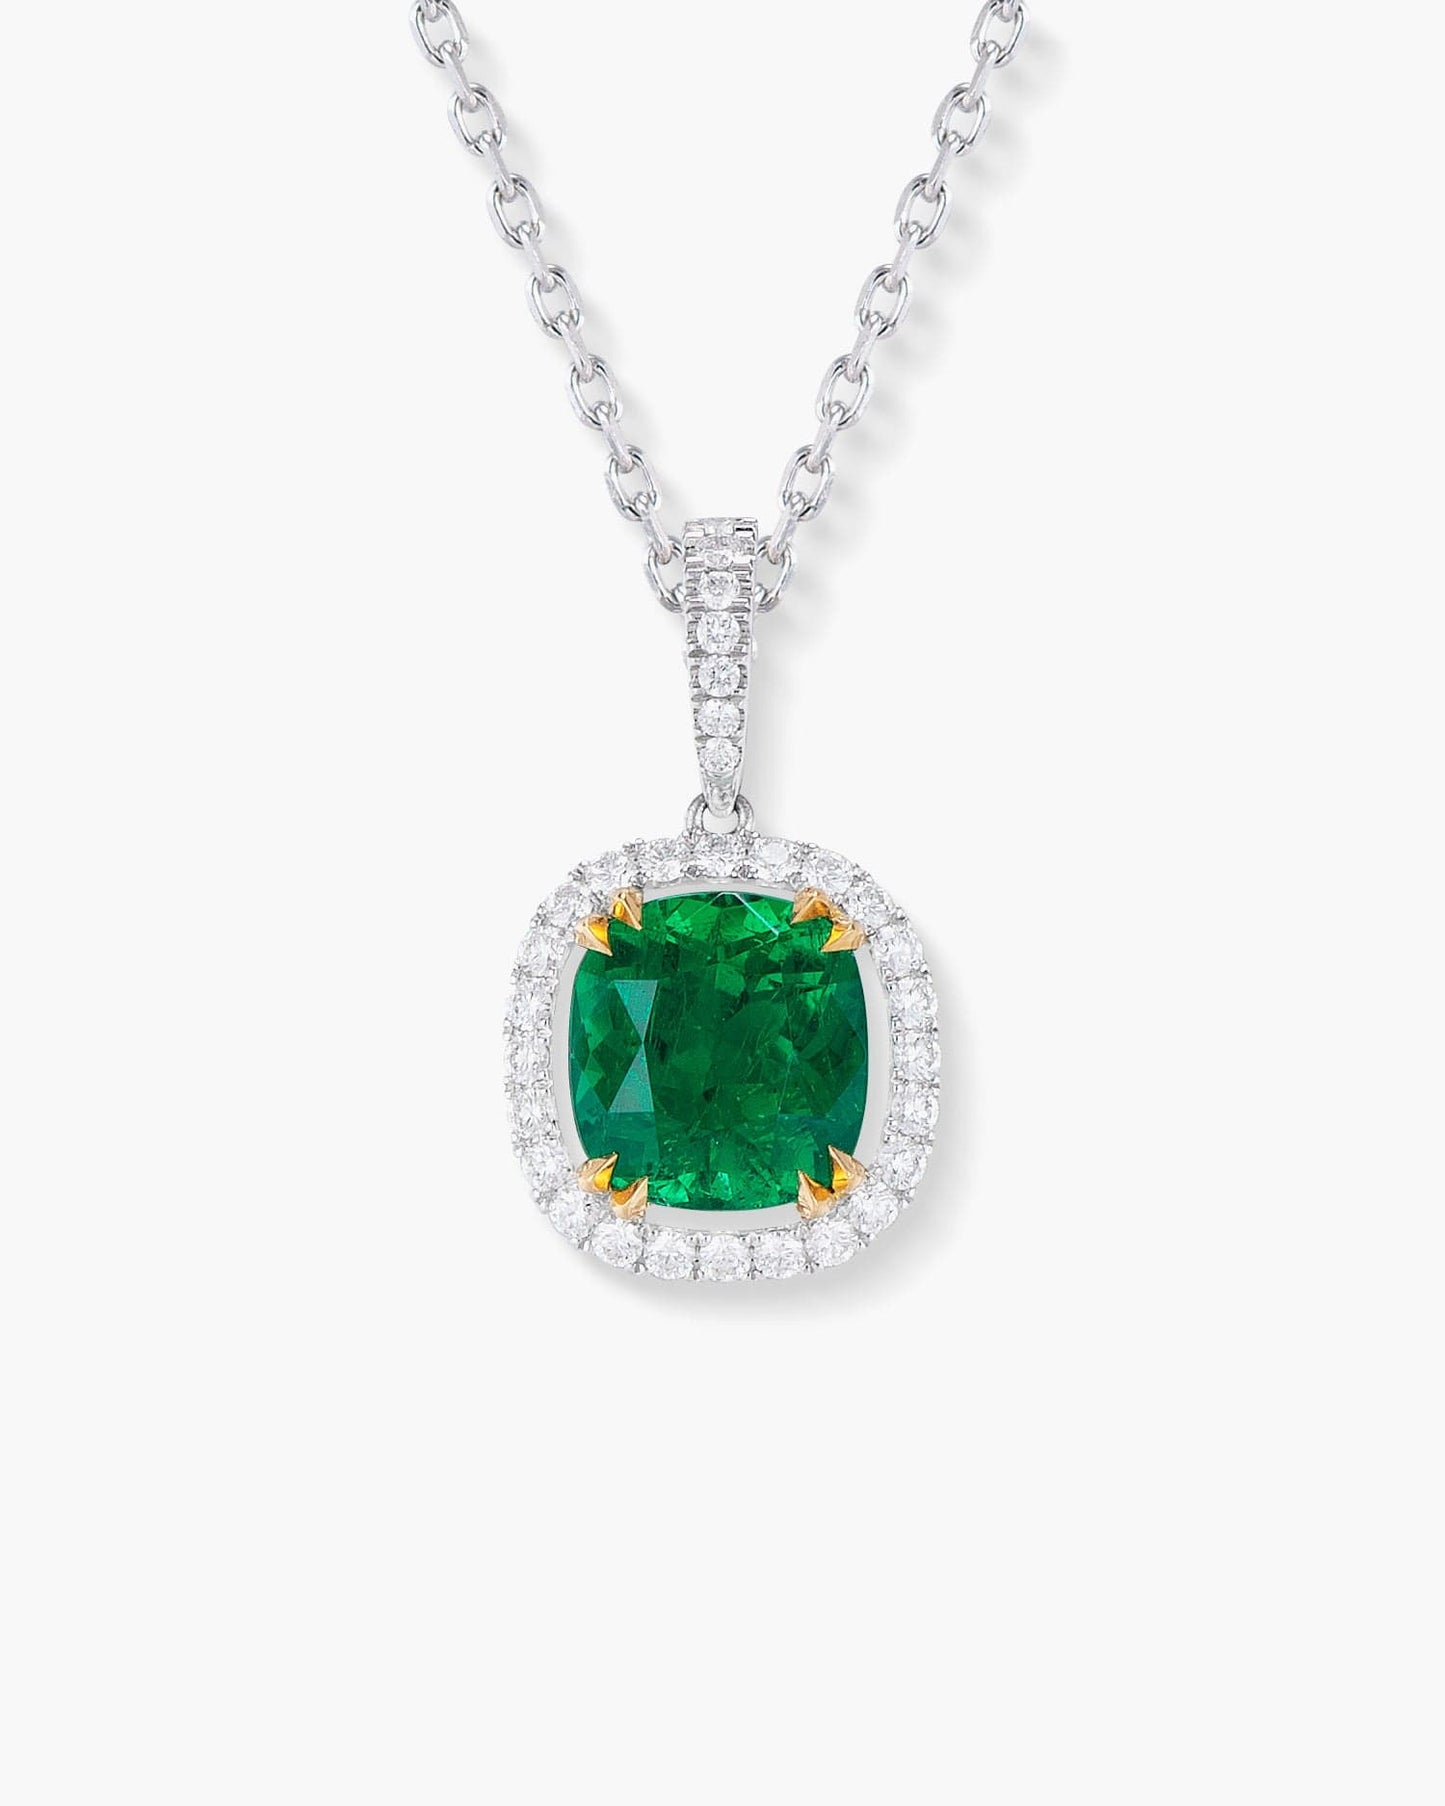 1.66 carat Cushion Cut Colombian Emerald and Diamond Pendant Necklace